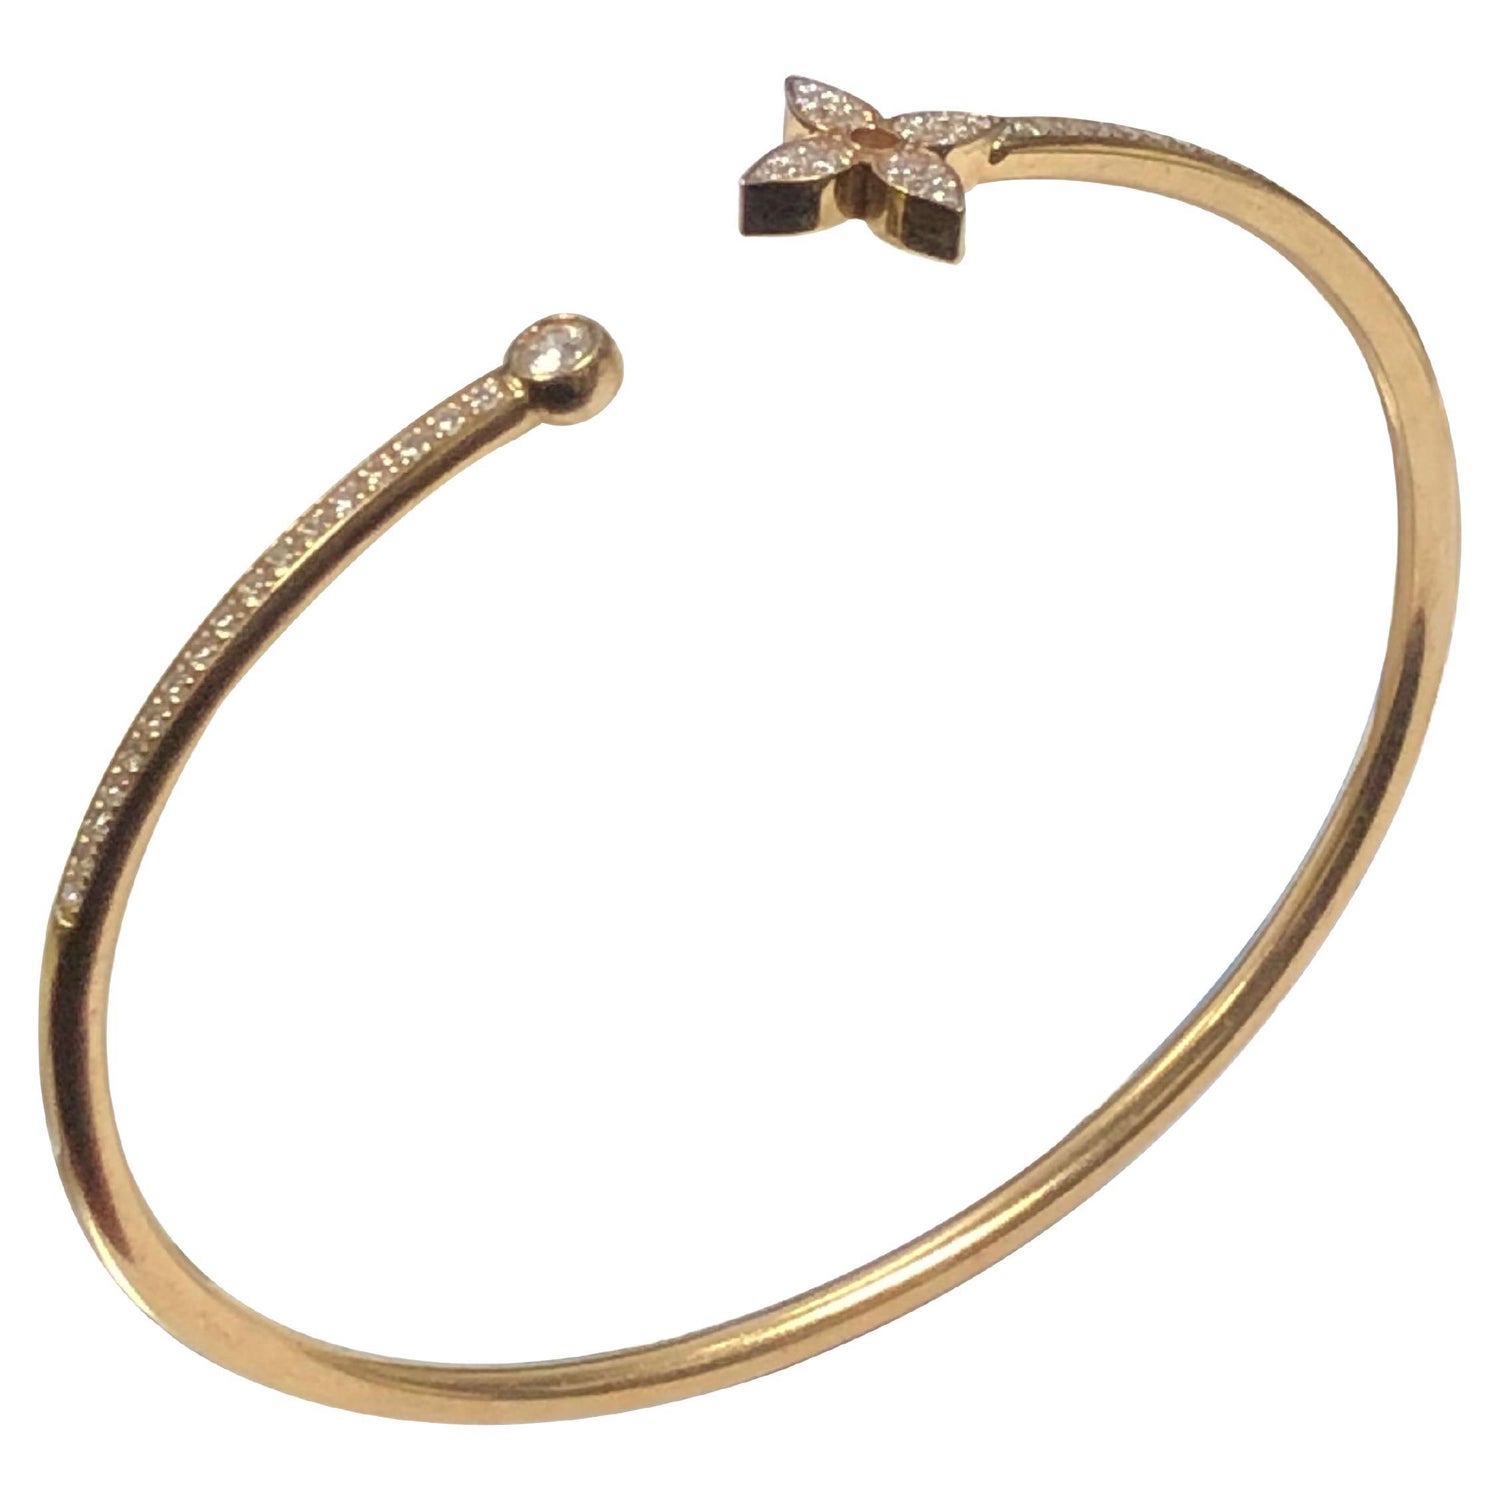 Louis Vuitton Idylle Blossom Monogram Bracelet, Yellow Gold and Diamonds Gold. Size NSA